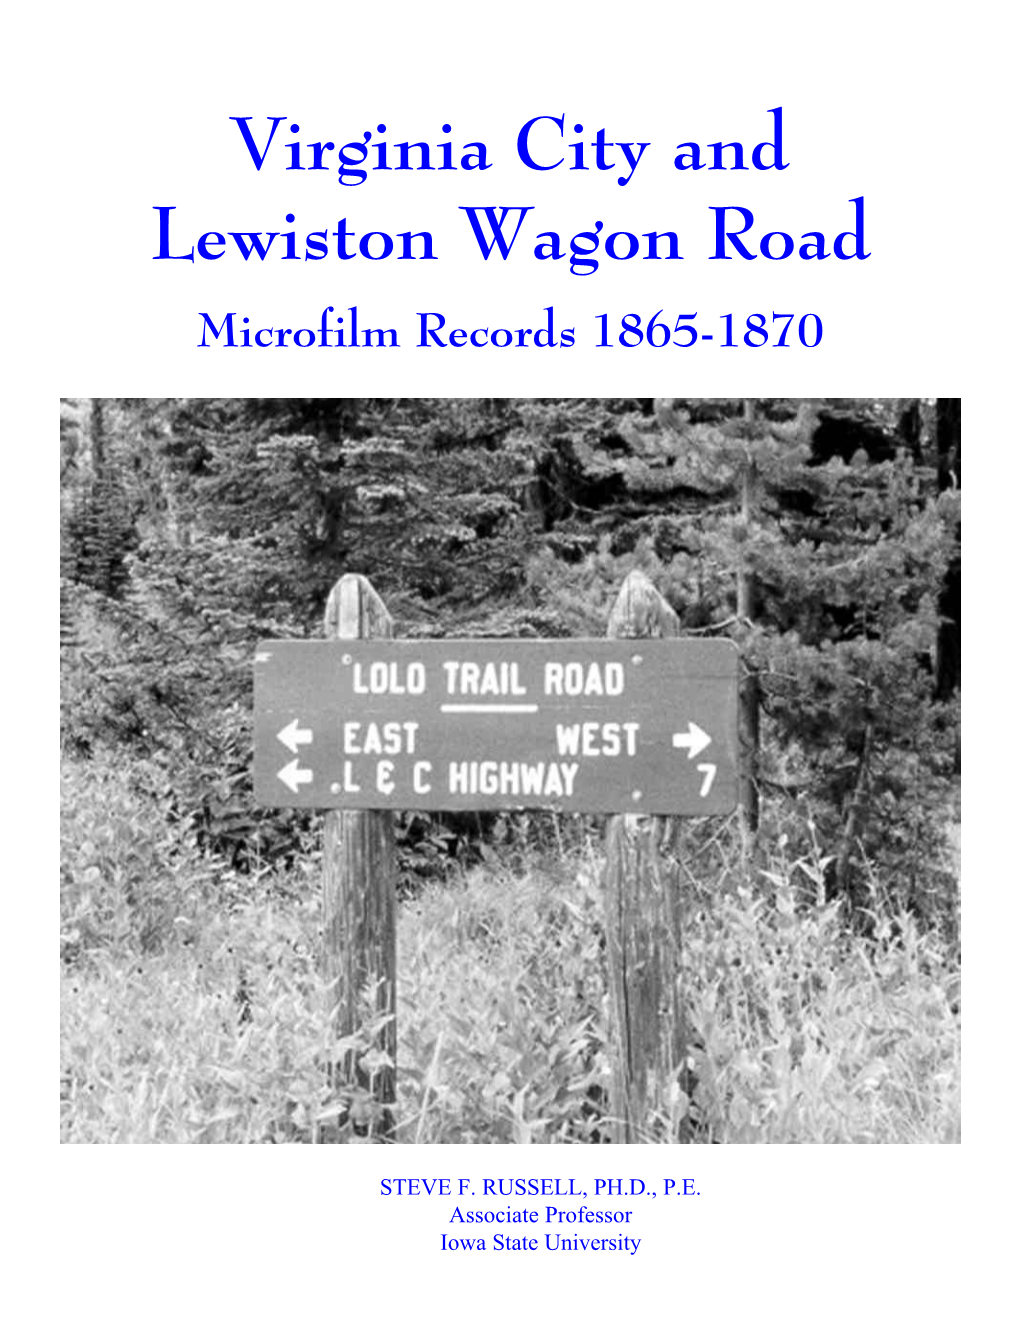 Virginia City and Lewiston Wagon Road Microfilm Records 1865-1870